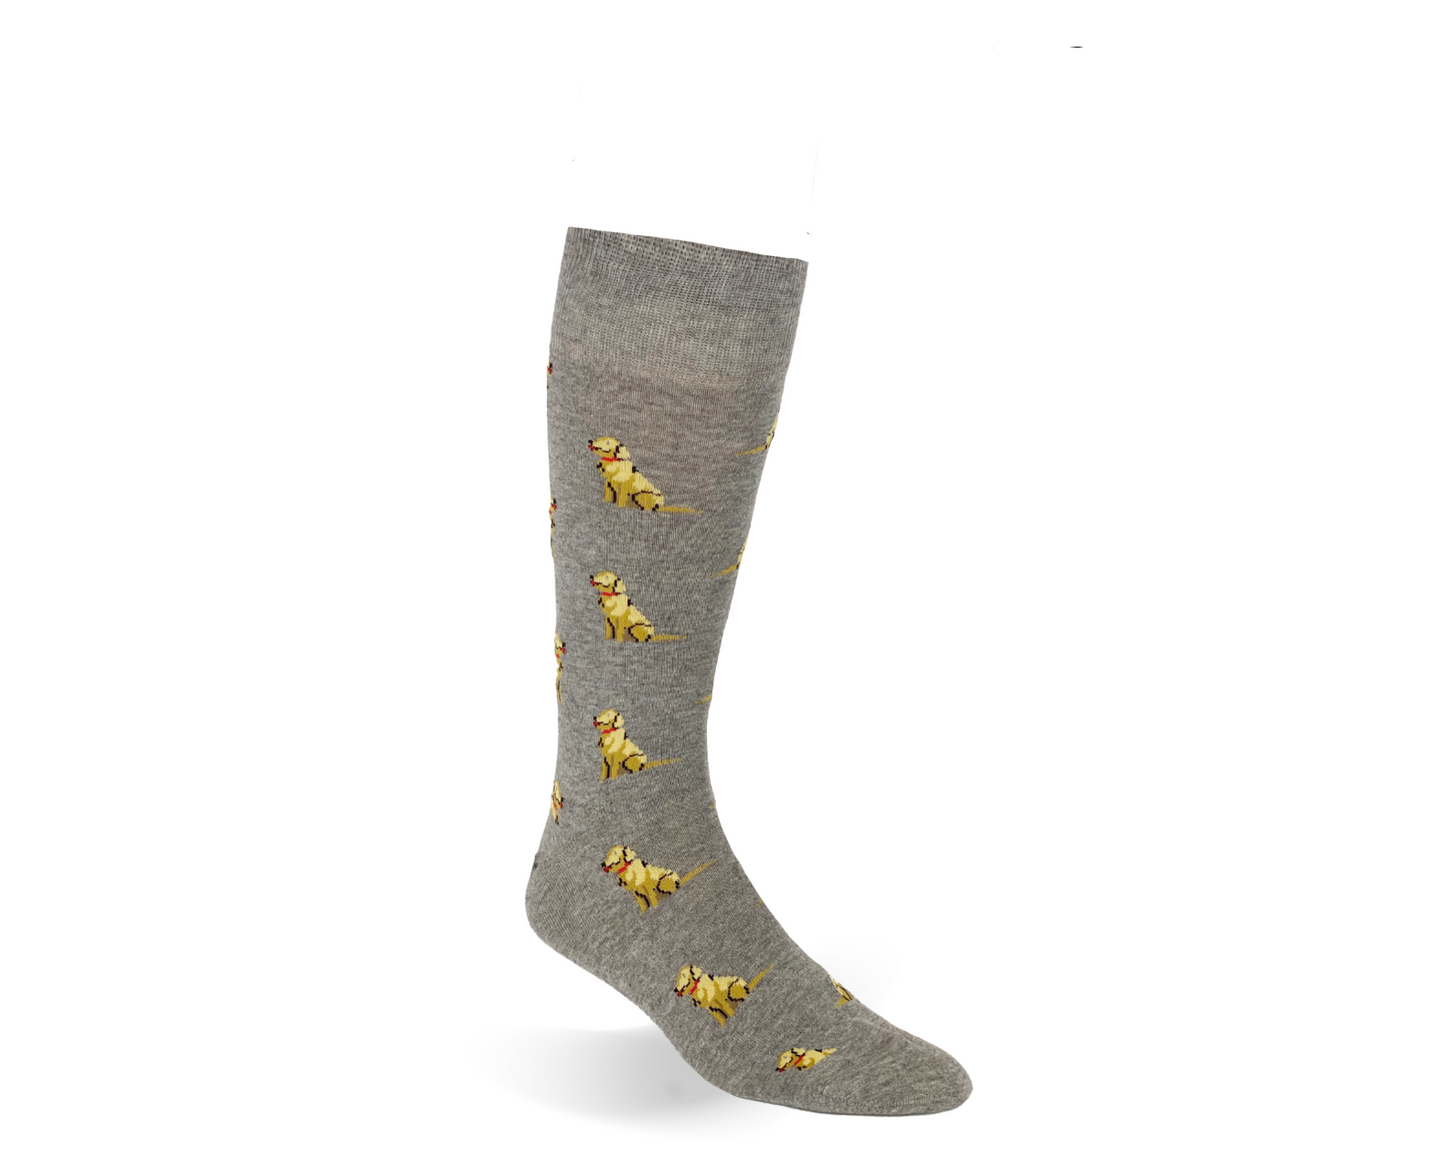 Eleanor Golden Retriever Sock